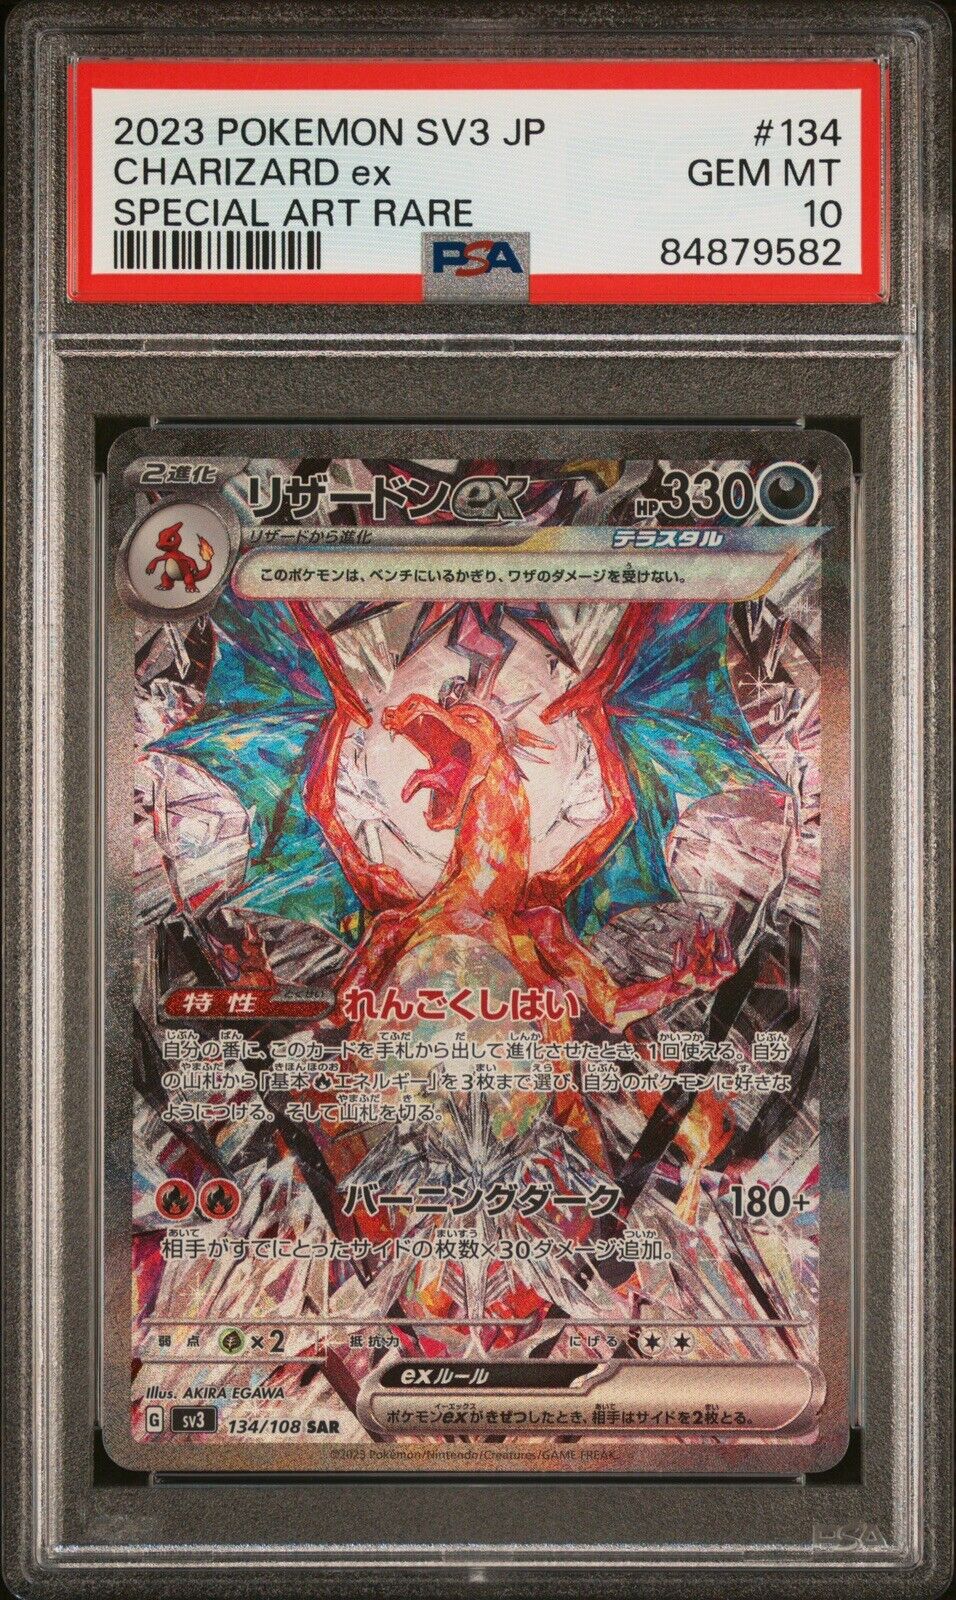 PSA 10 - Charizard ex - Pokemon Card - sv3 134/108 SAR - Japanese - Black Flame